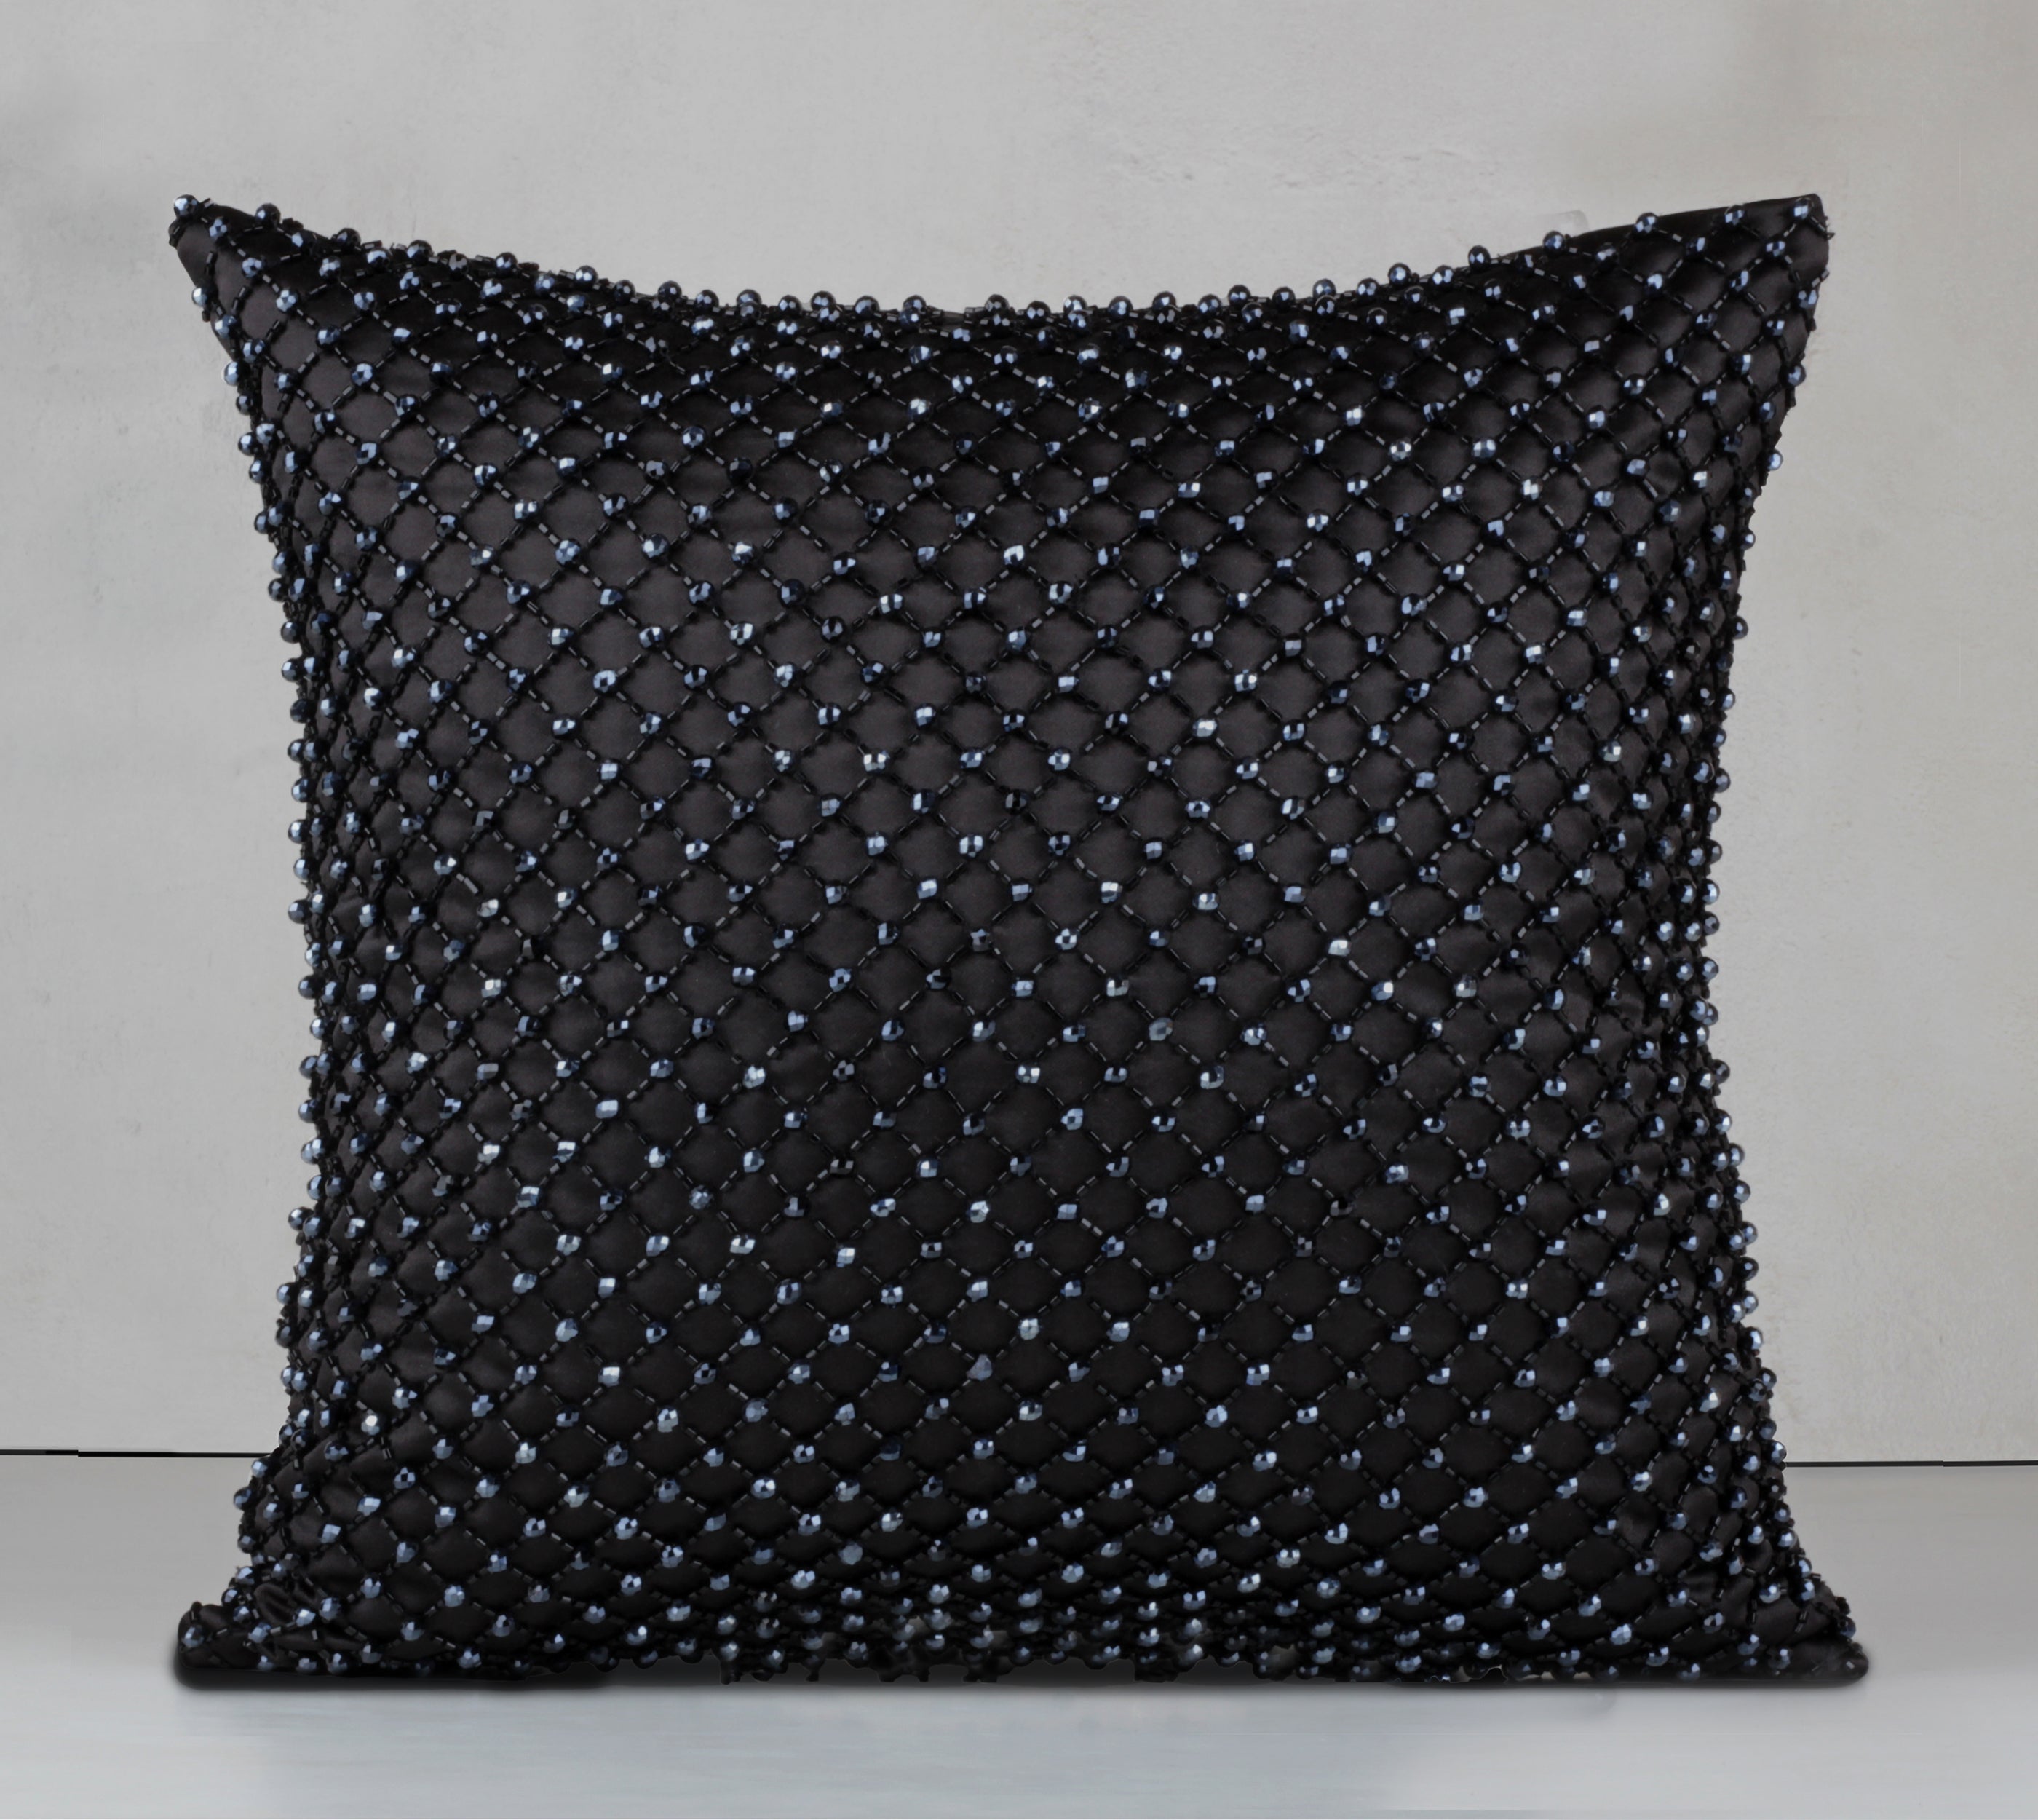 MIDAS Black Bling  Cushion Cover